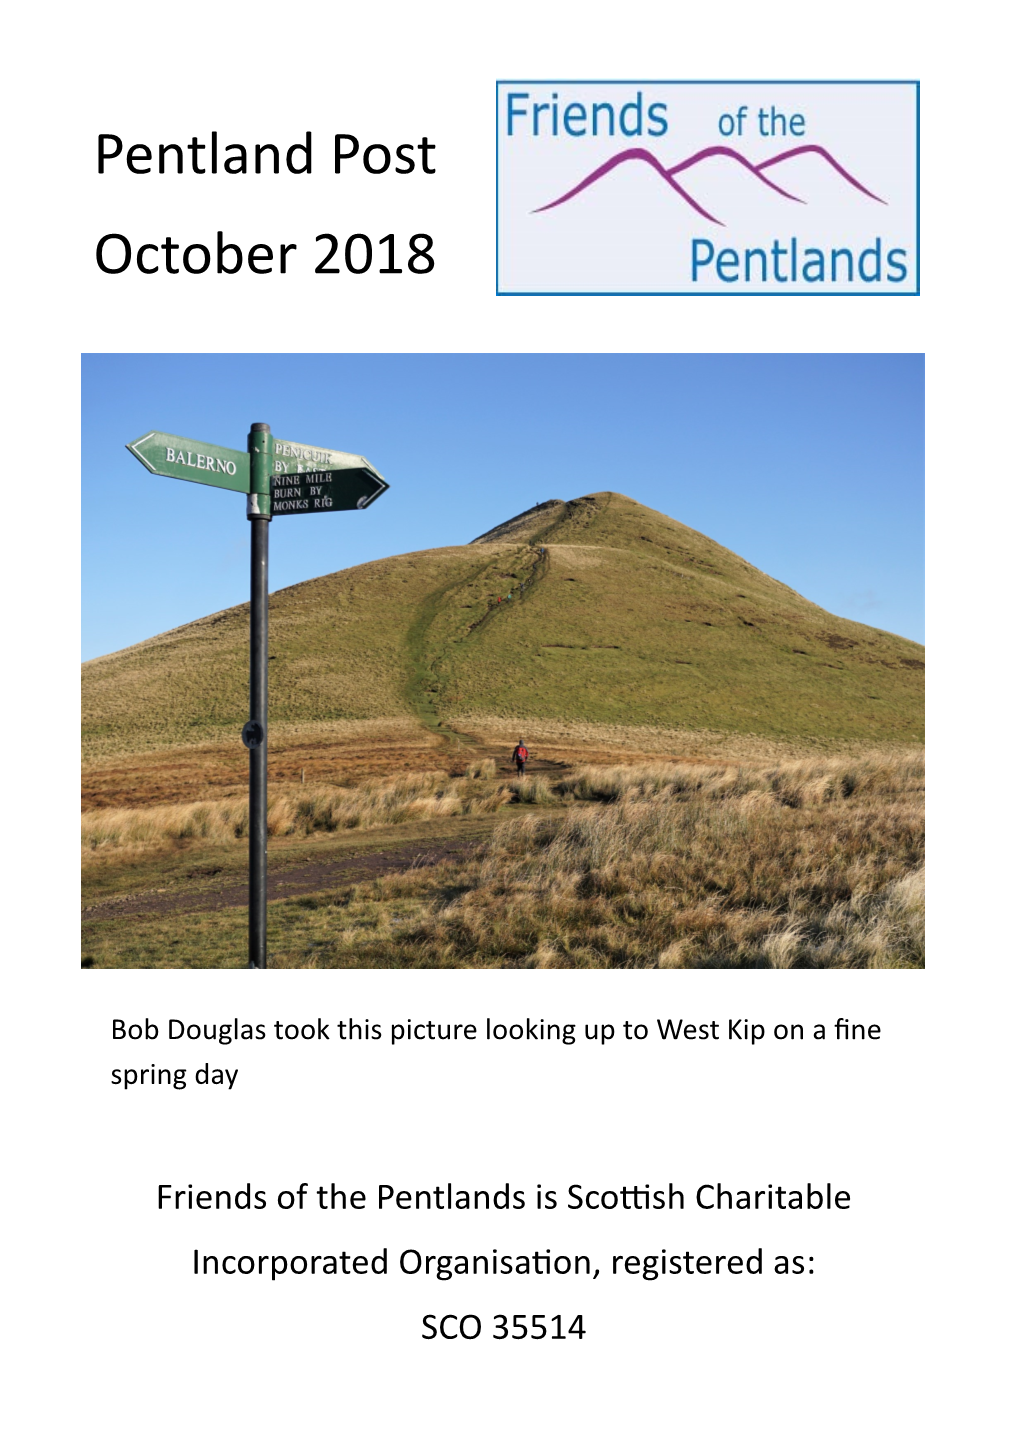 Pentland Post Oct 18